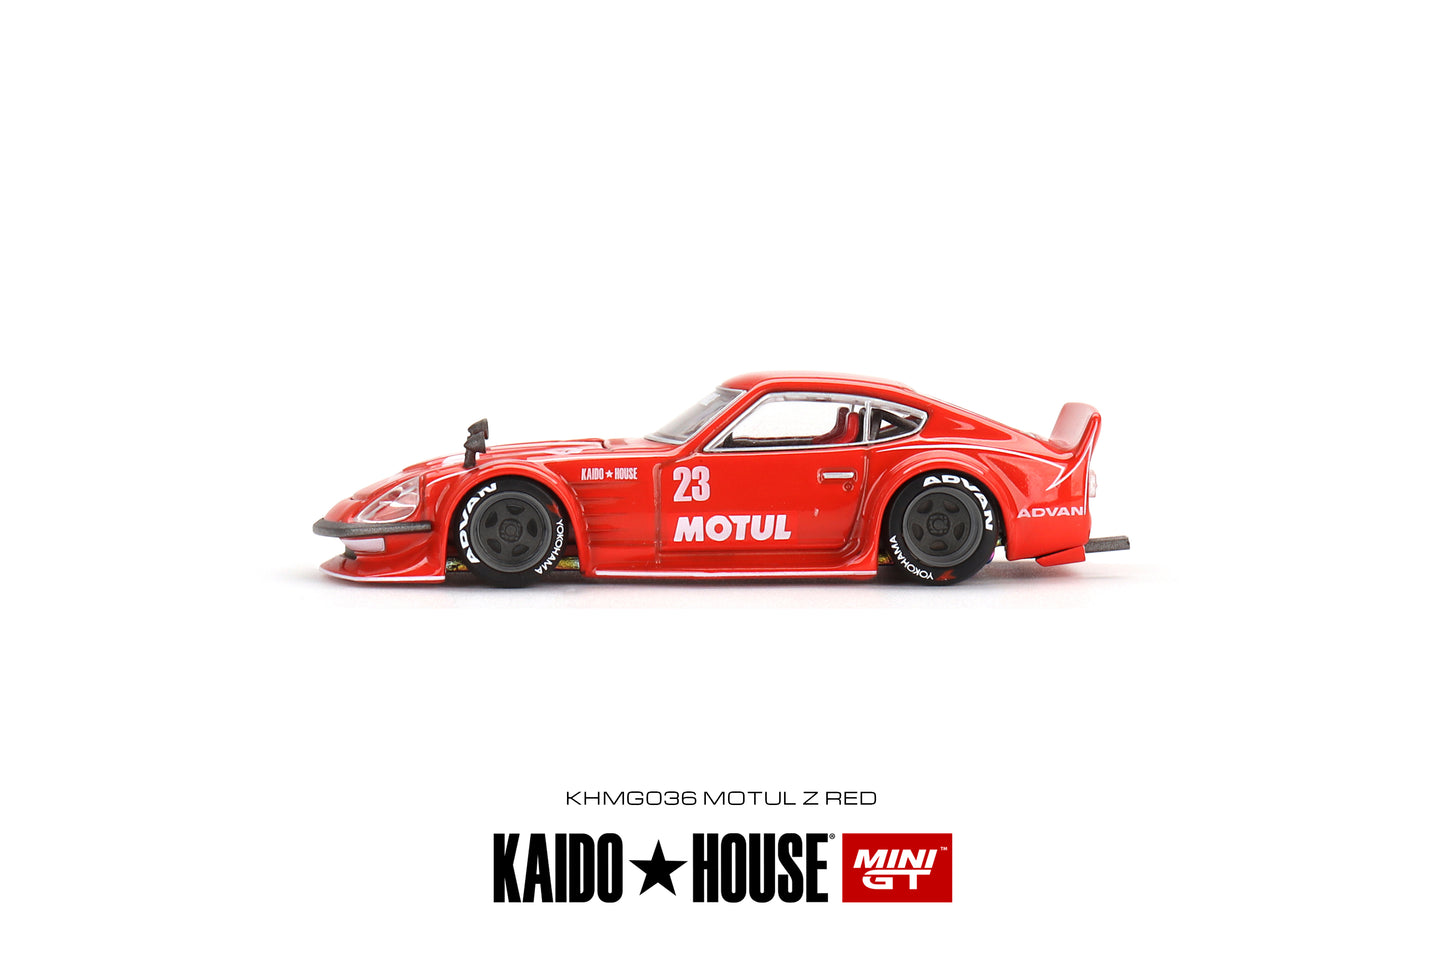 Mini GT x Kaido House No.036 Datsun Kaido Fairlady Z Motul V2